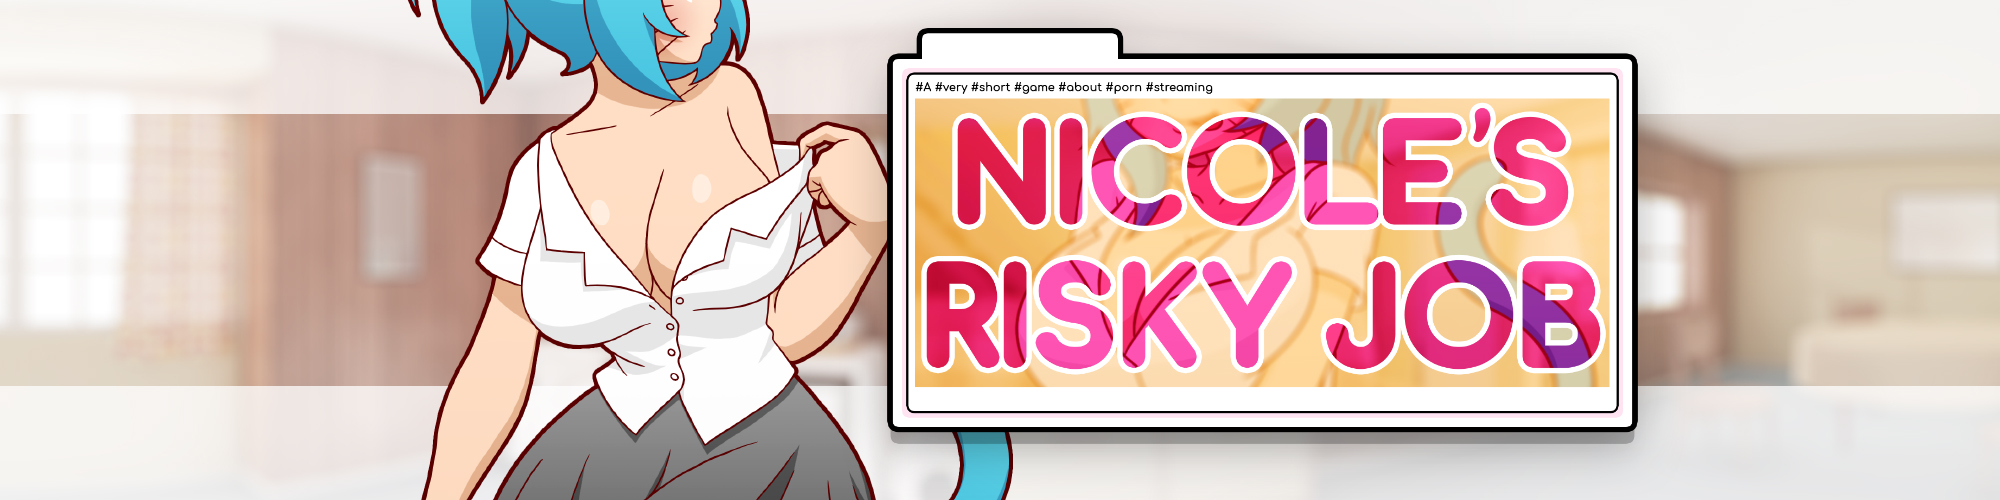 Short Porn Streaming - Nicole's Risky Job by Manyakis